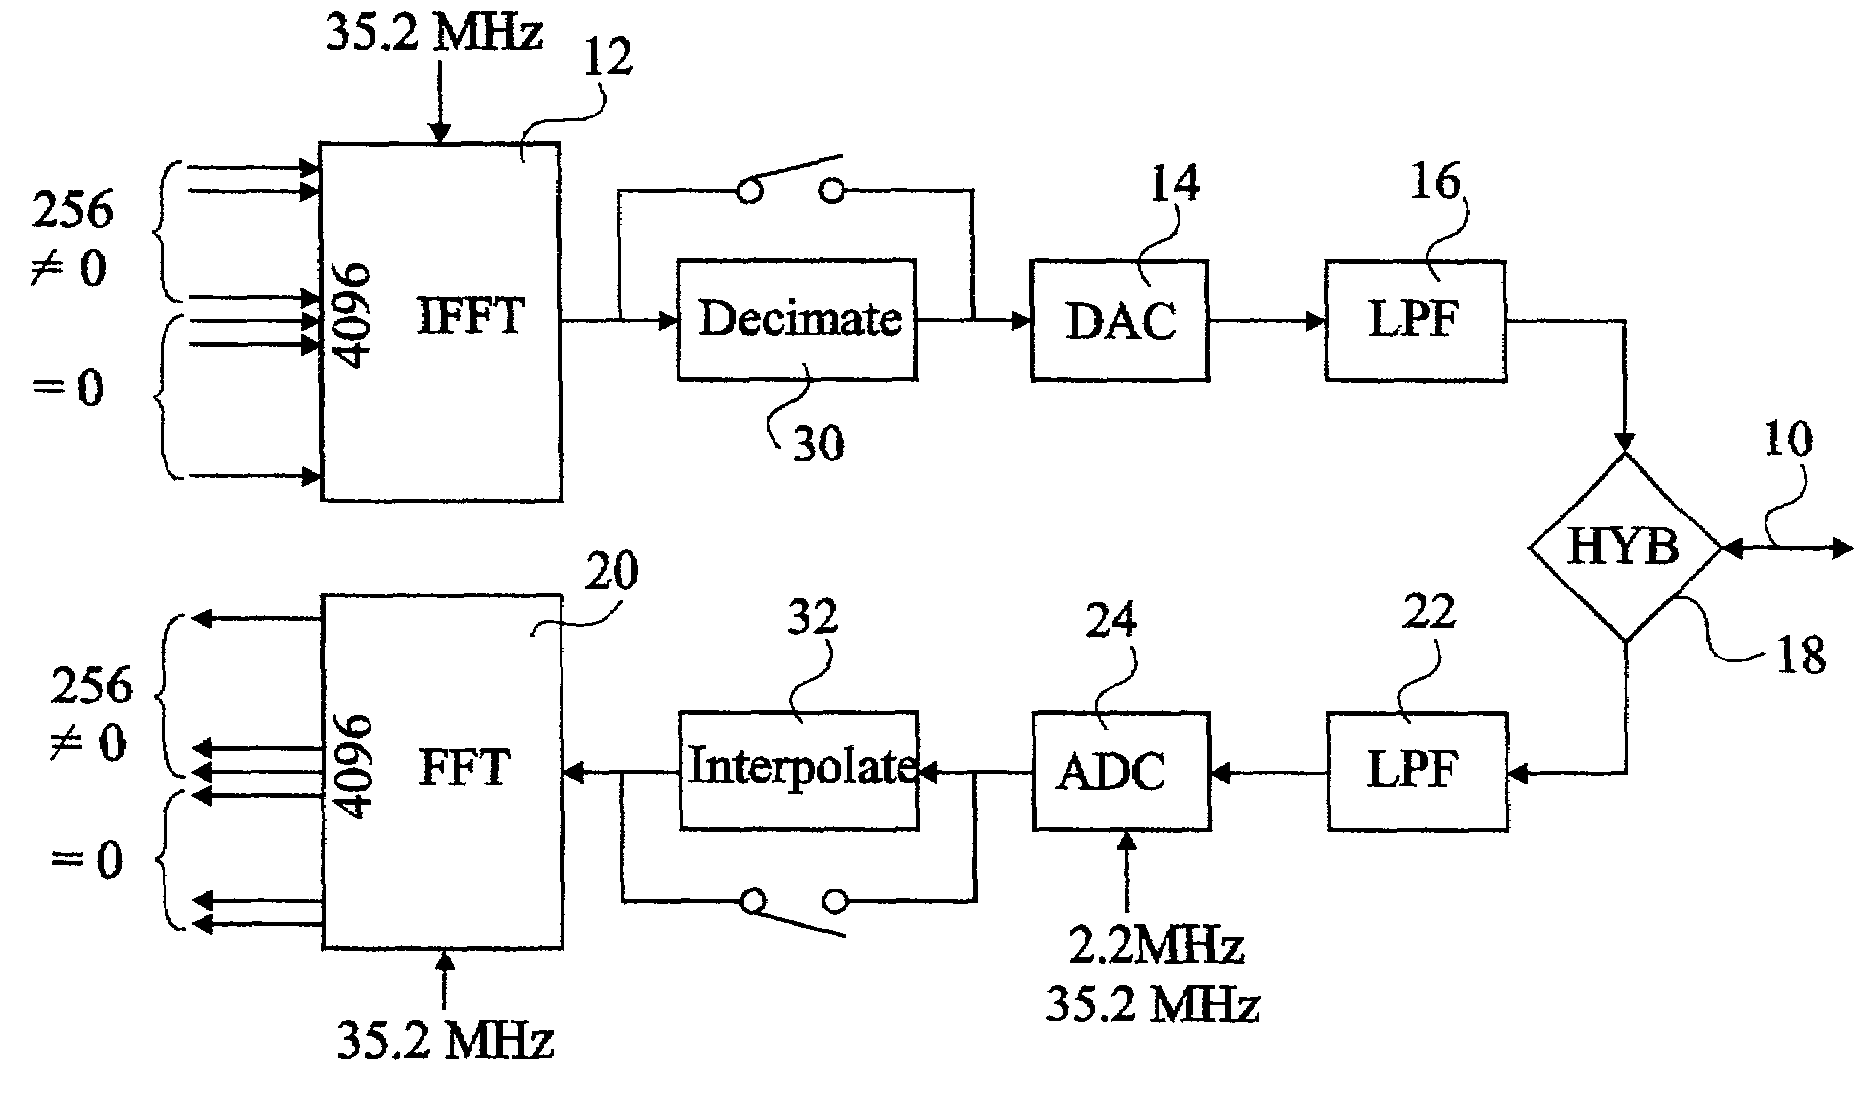 Multistandard discrete multi-tone (DMT) digital subscriber line (DSL) system